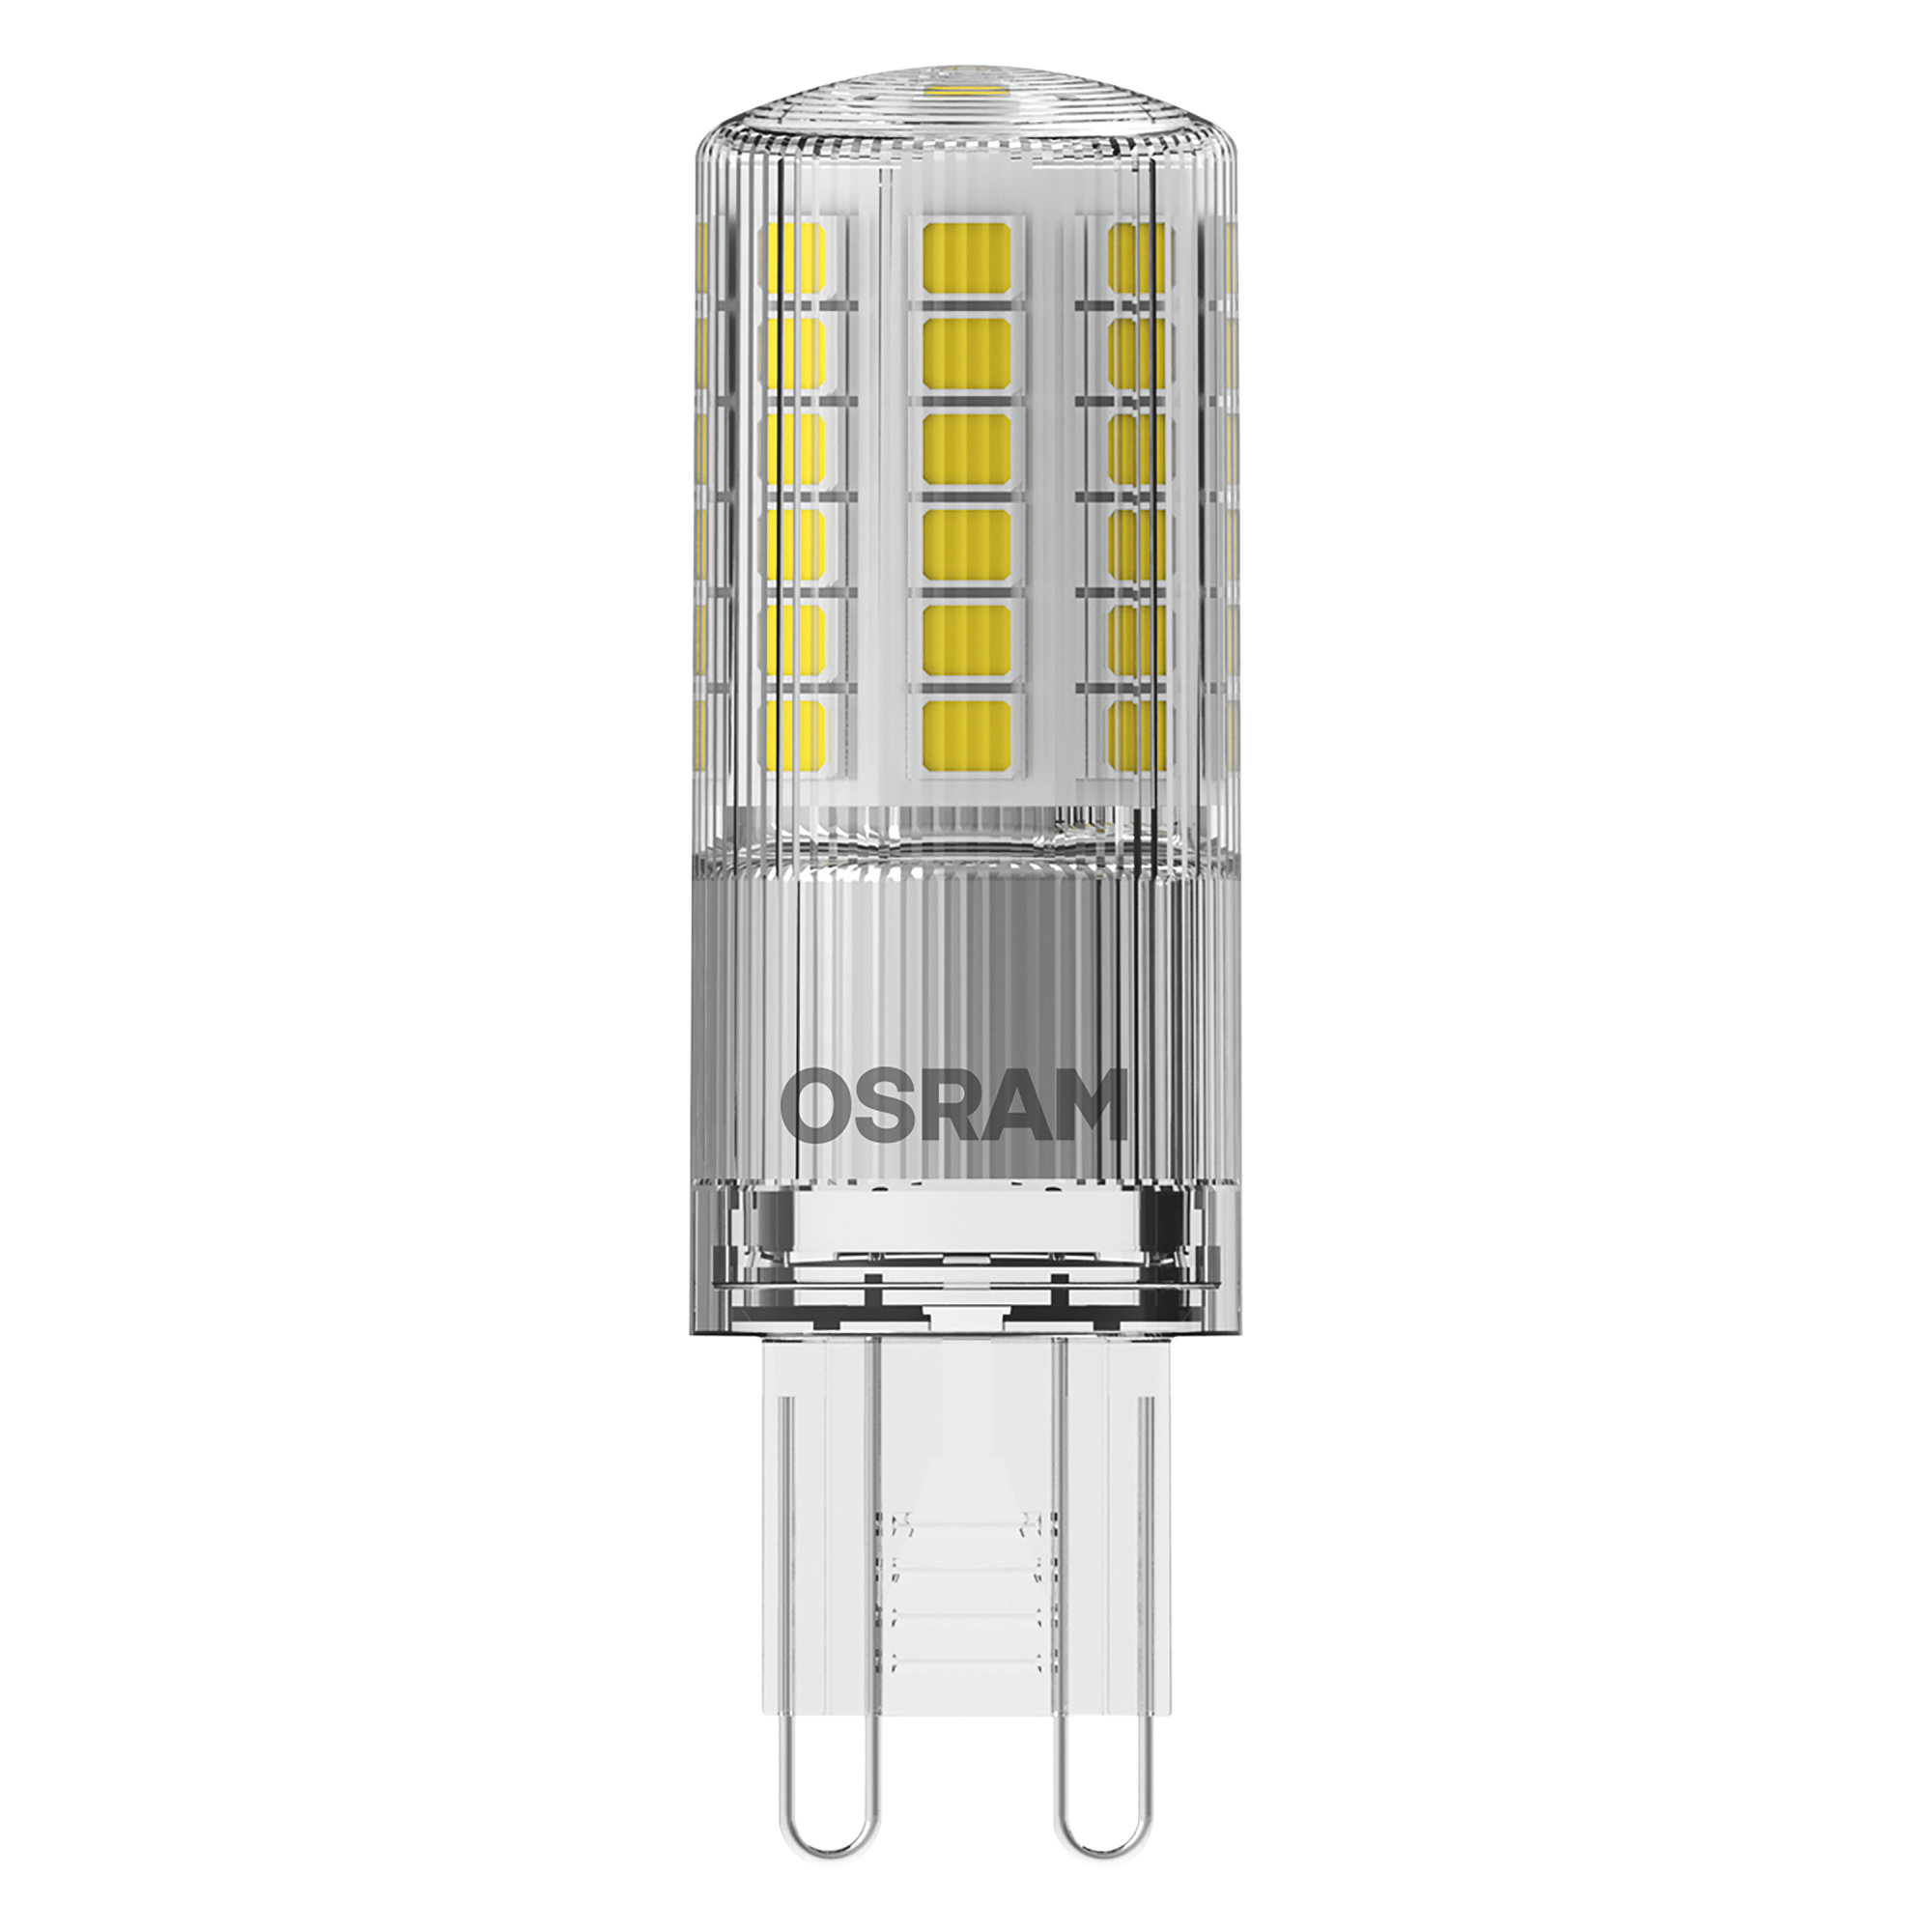 Osram LED STAR PIN 48 clear non-dim 4.8W 827 G9 600lm 2700K